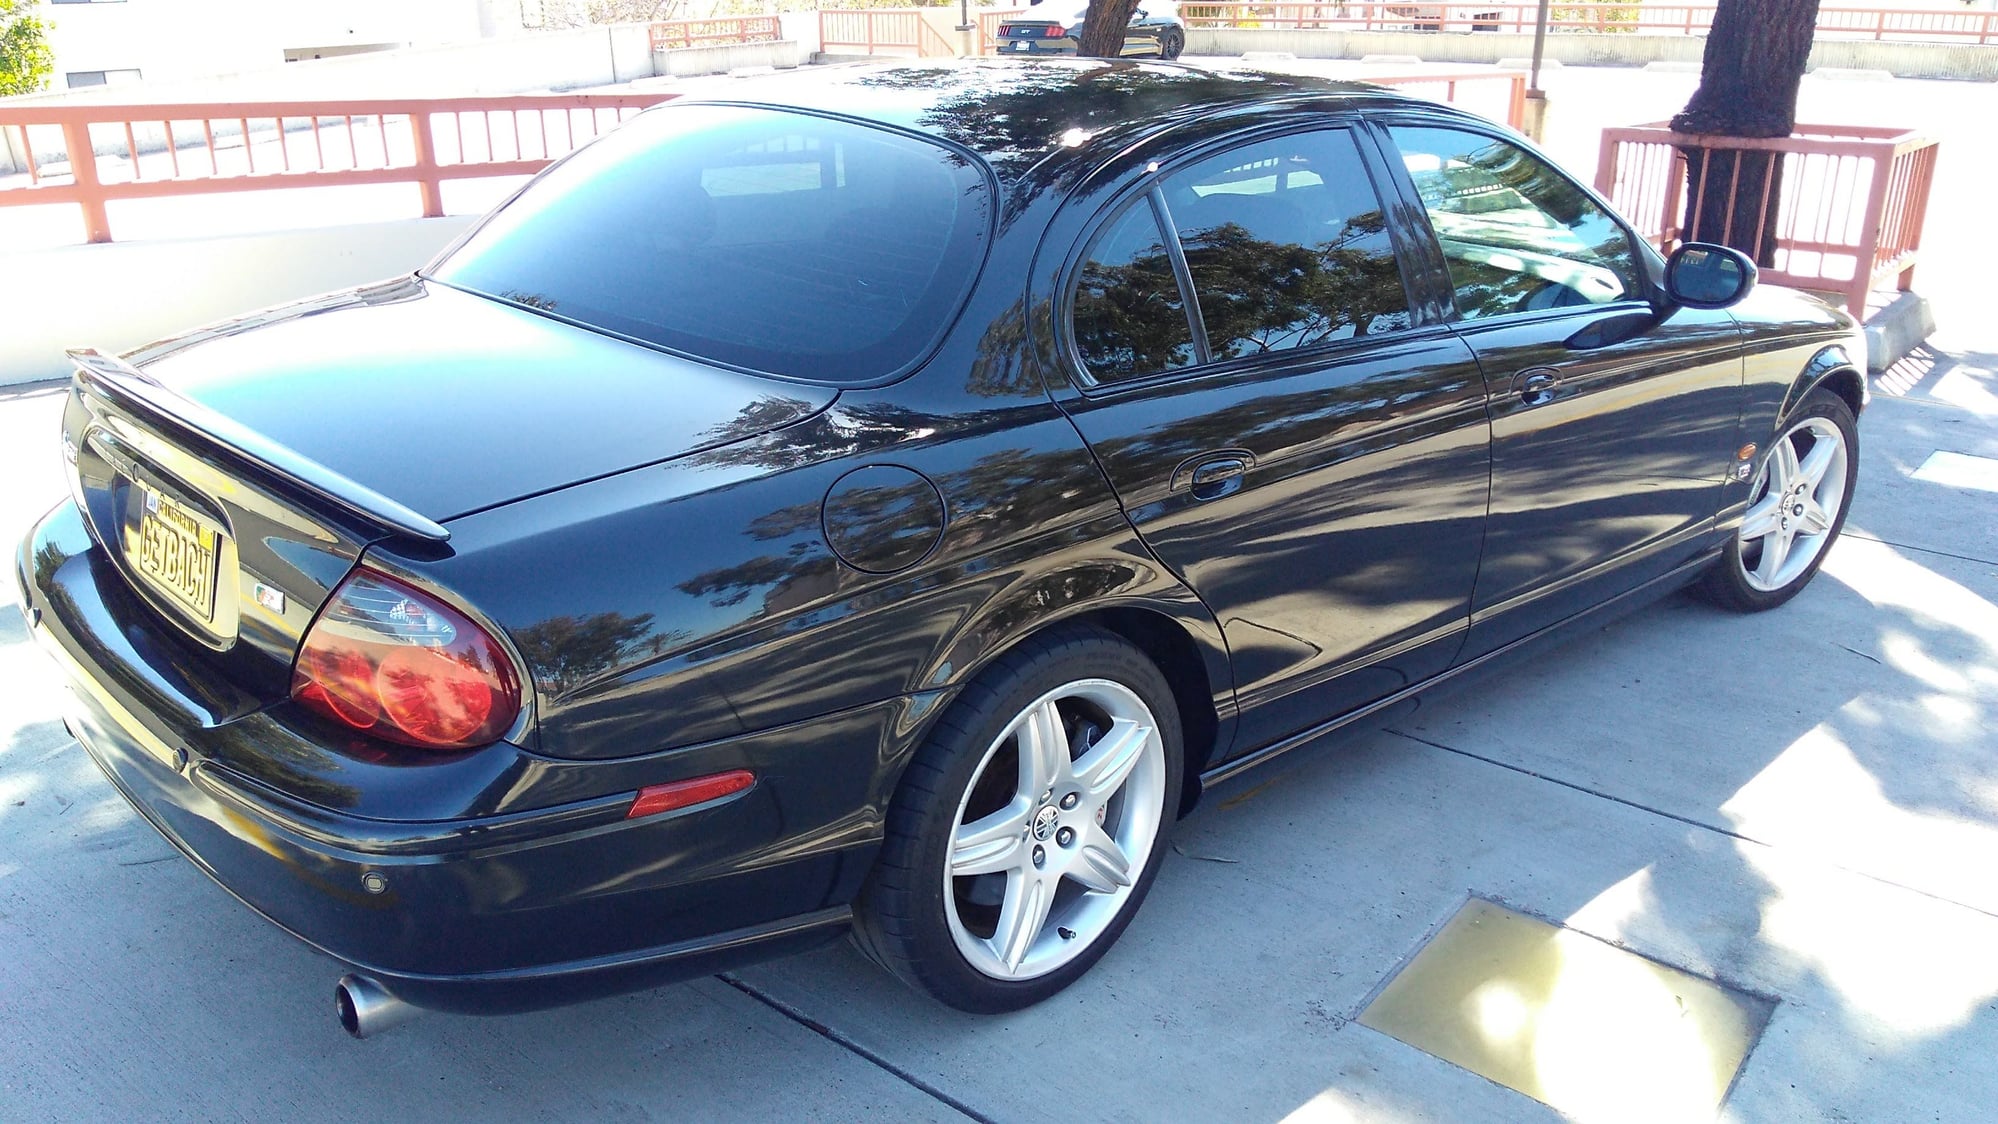 2003 Jaguar S-Type - 2003 S-Type R Supercharged - Used - VIN SAJEA03V331M54771 - 128,000 Miles - 8 cyl - 2WD - Automatic - Sedan - Black - Chula Vista, CA 91910, United States